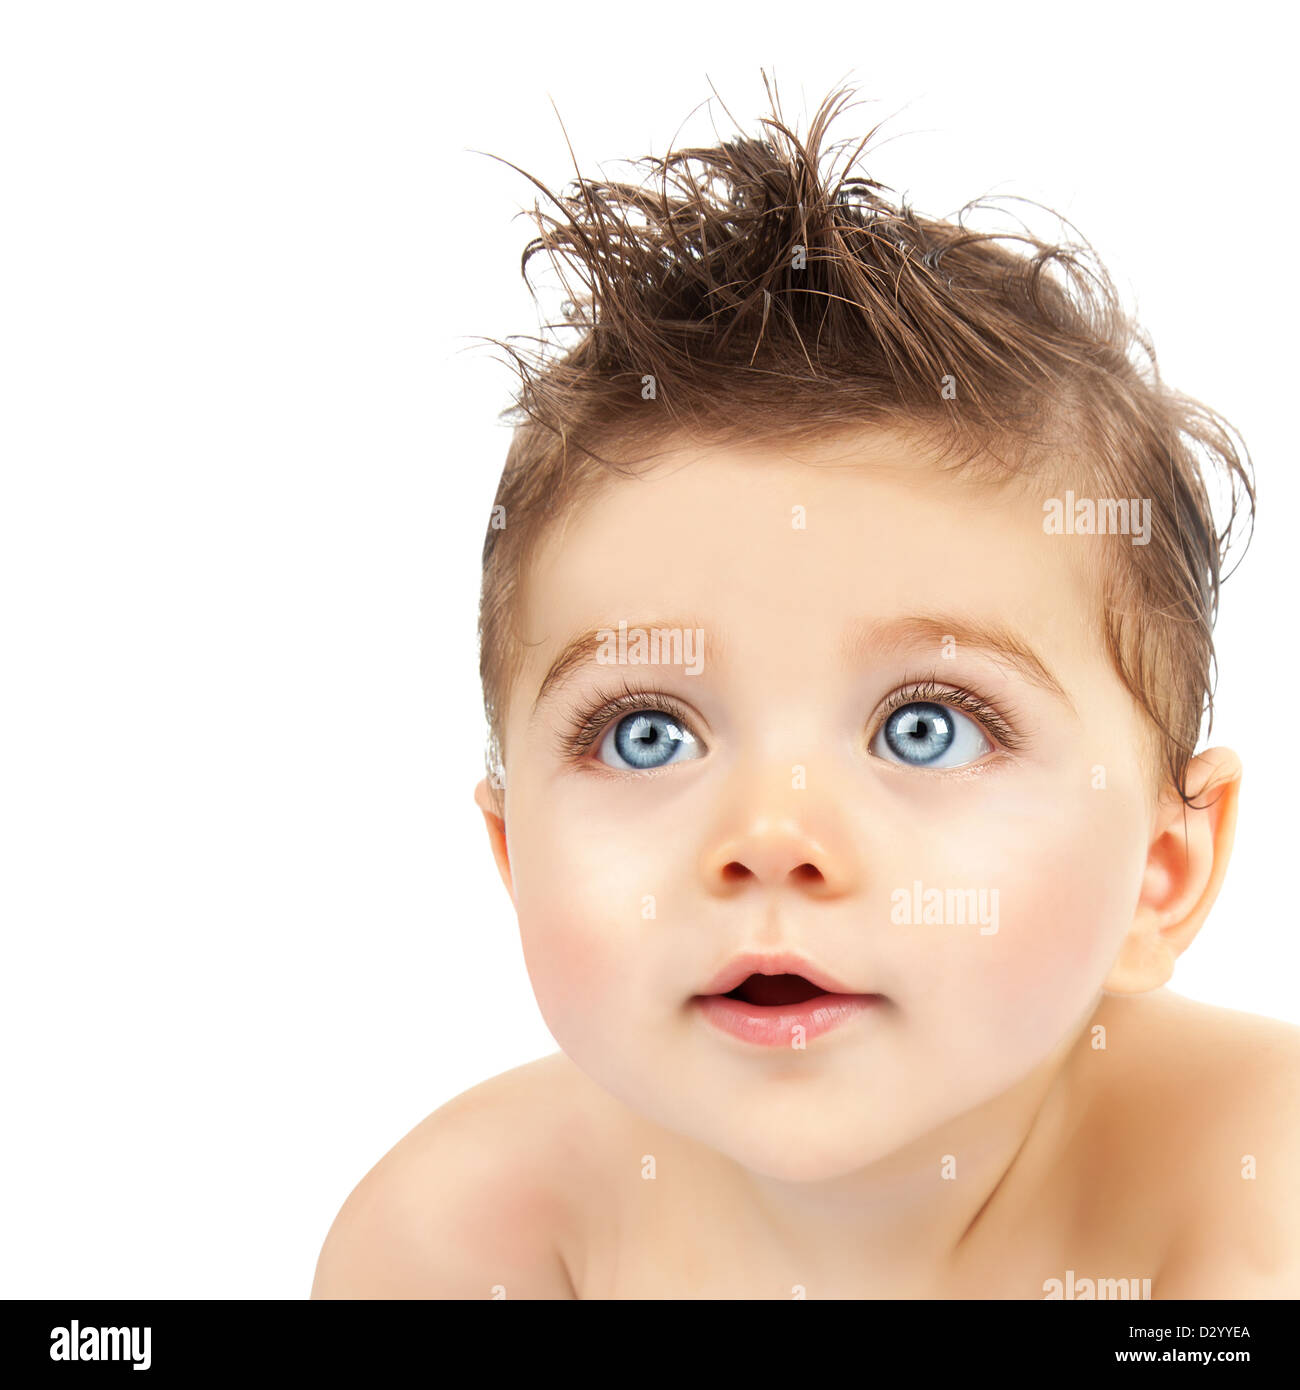 Image of cute baby boy, closeup portrait of adorable child ...